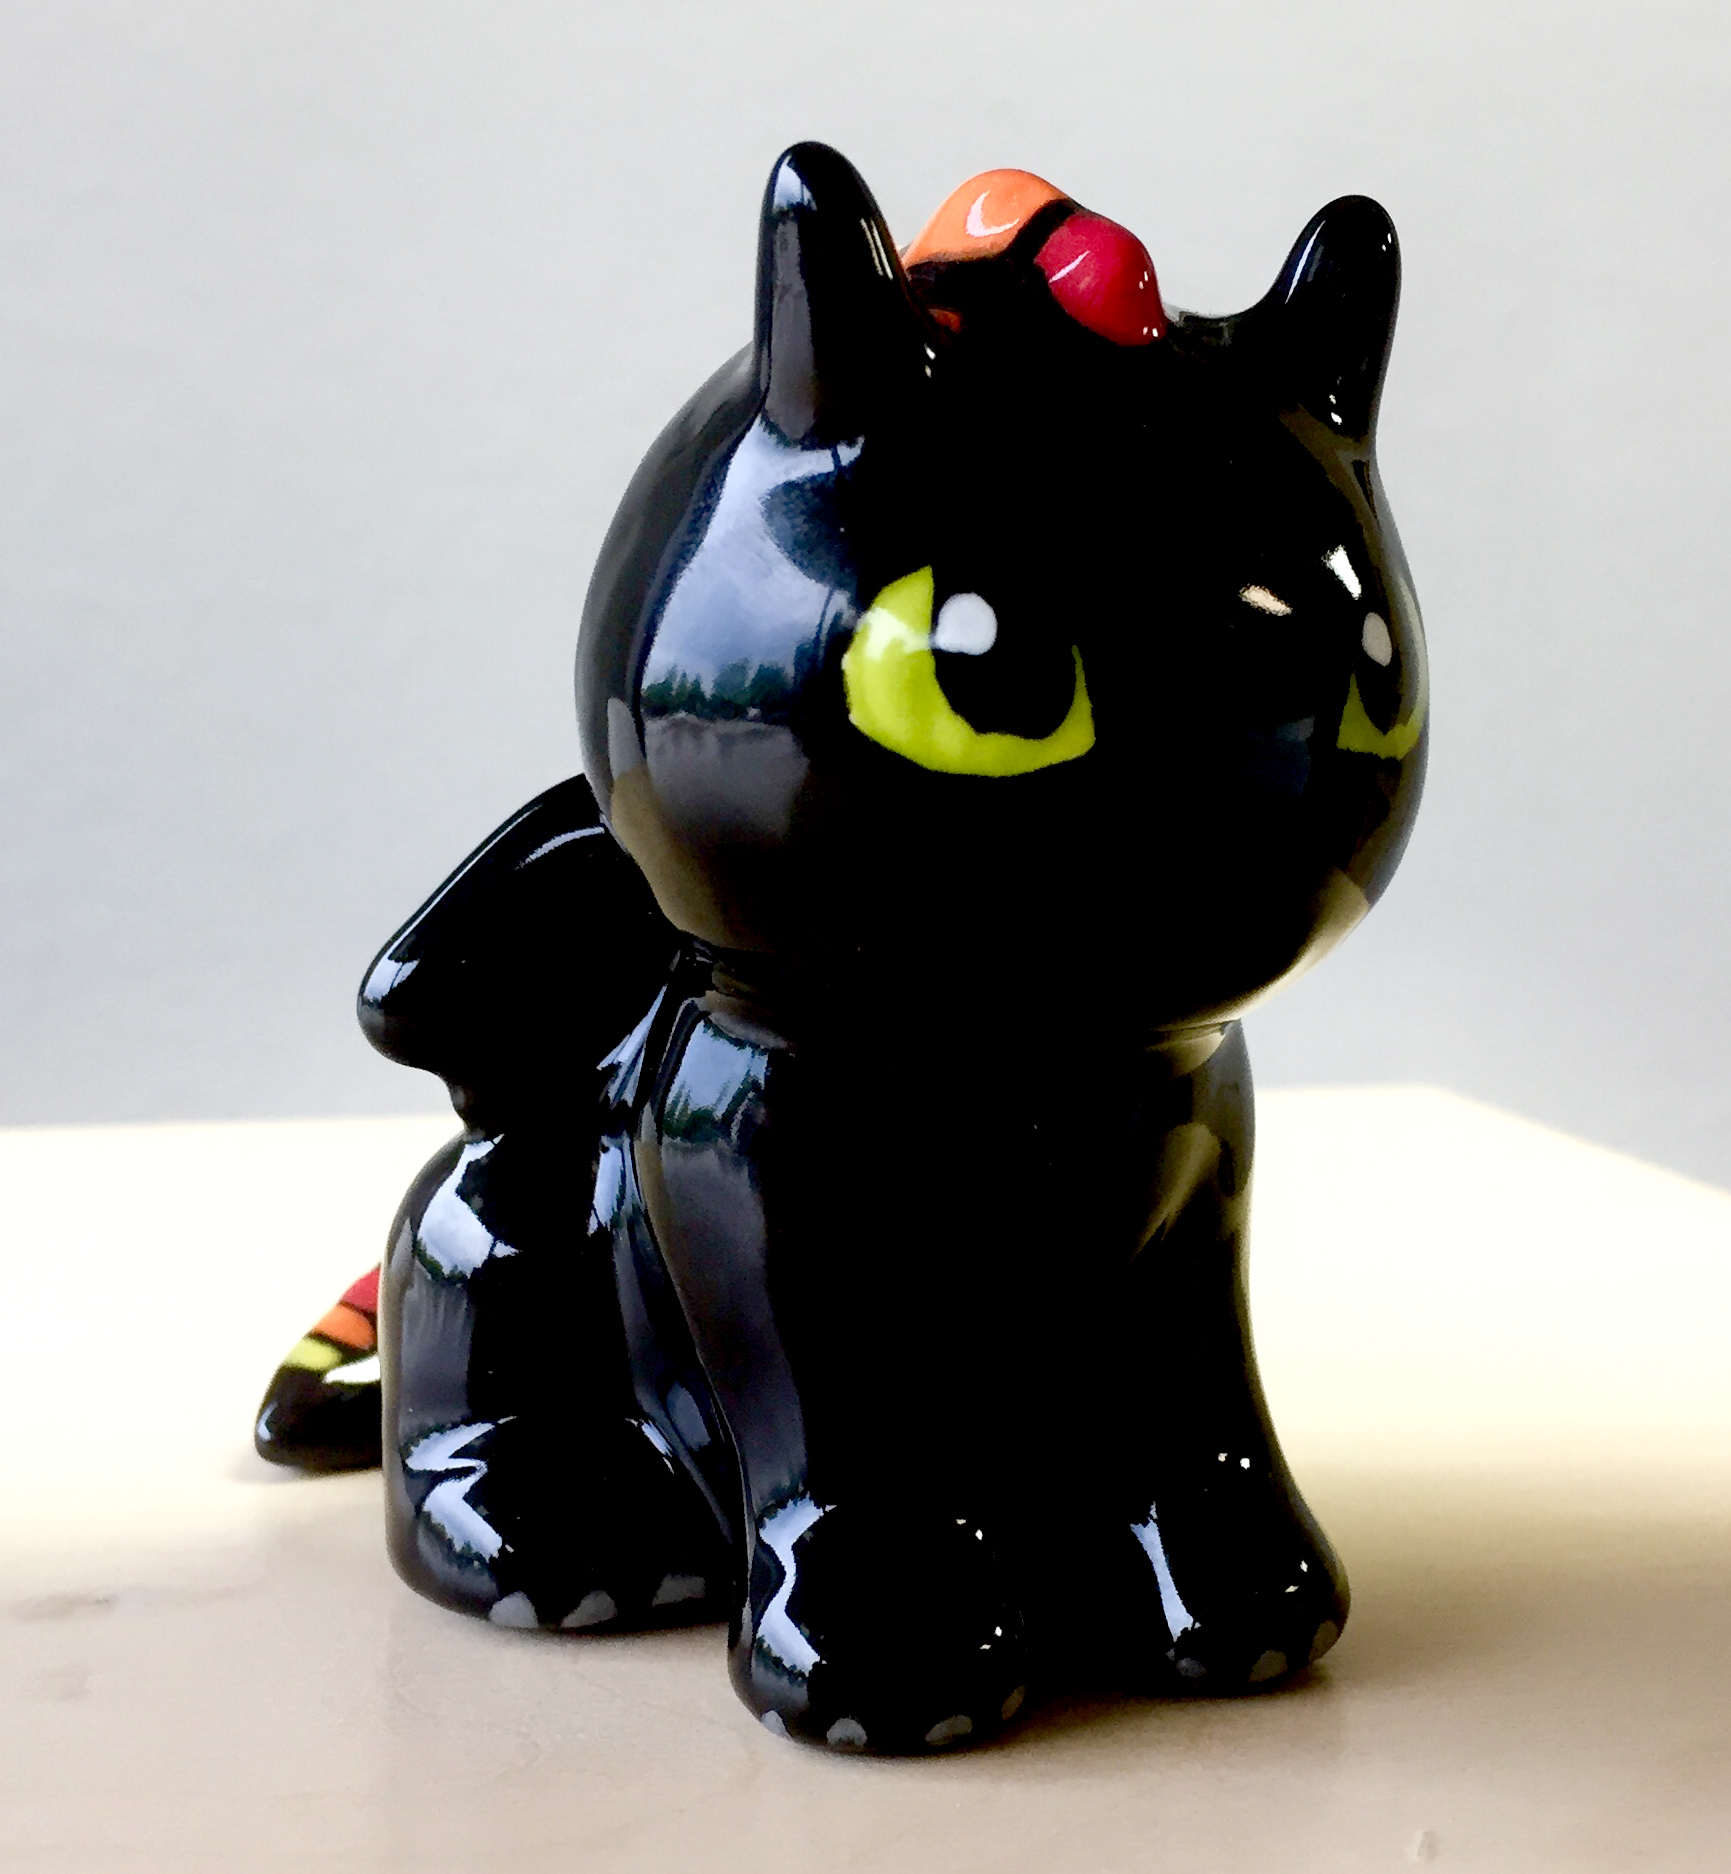 Painted black ceramic dragon